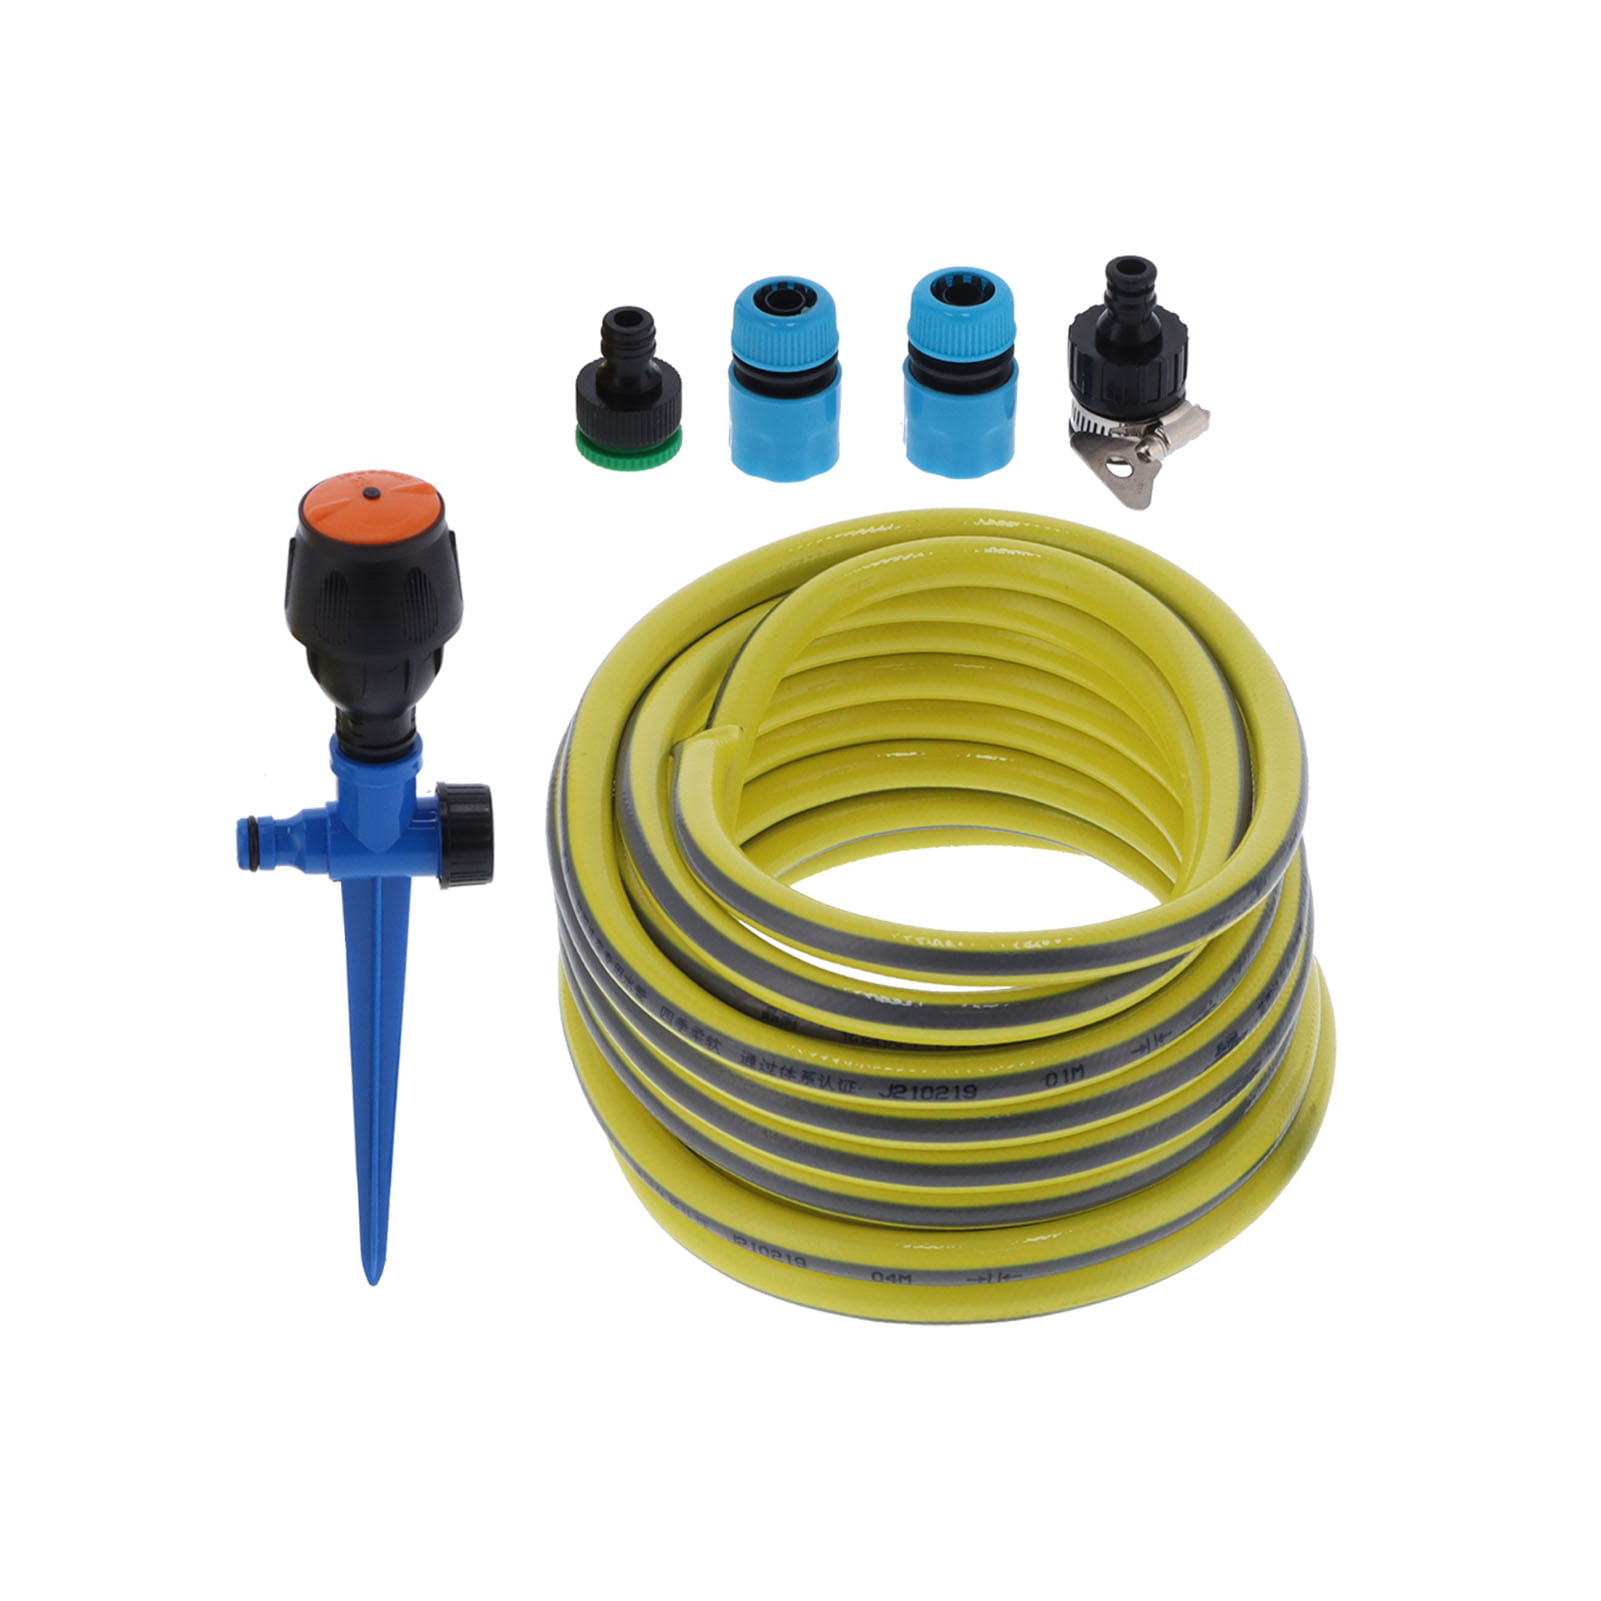 Renewed Orbit 50020 In-Ground Blu-Lock Tubing System and Digital Hose Faucet Timer Blue Black 1-Zone Sprinkler Kit